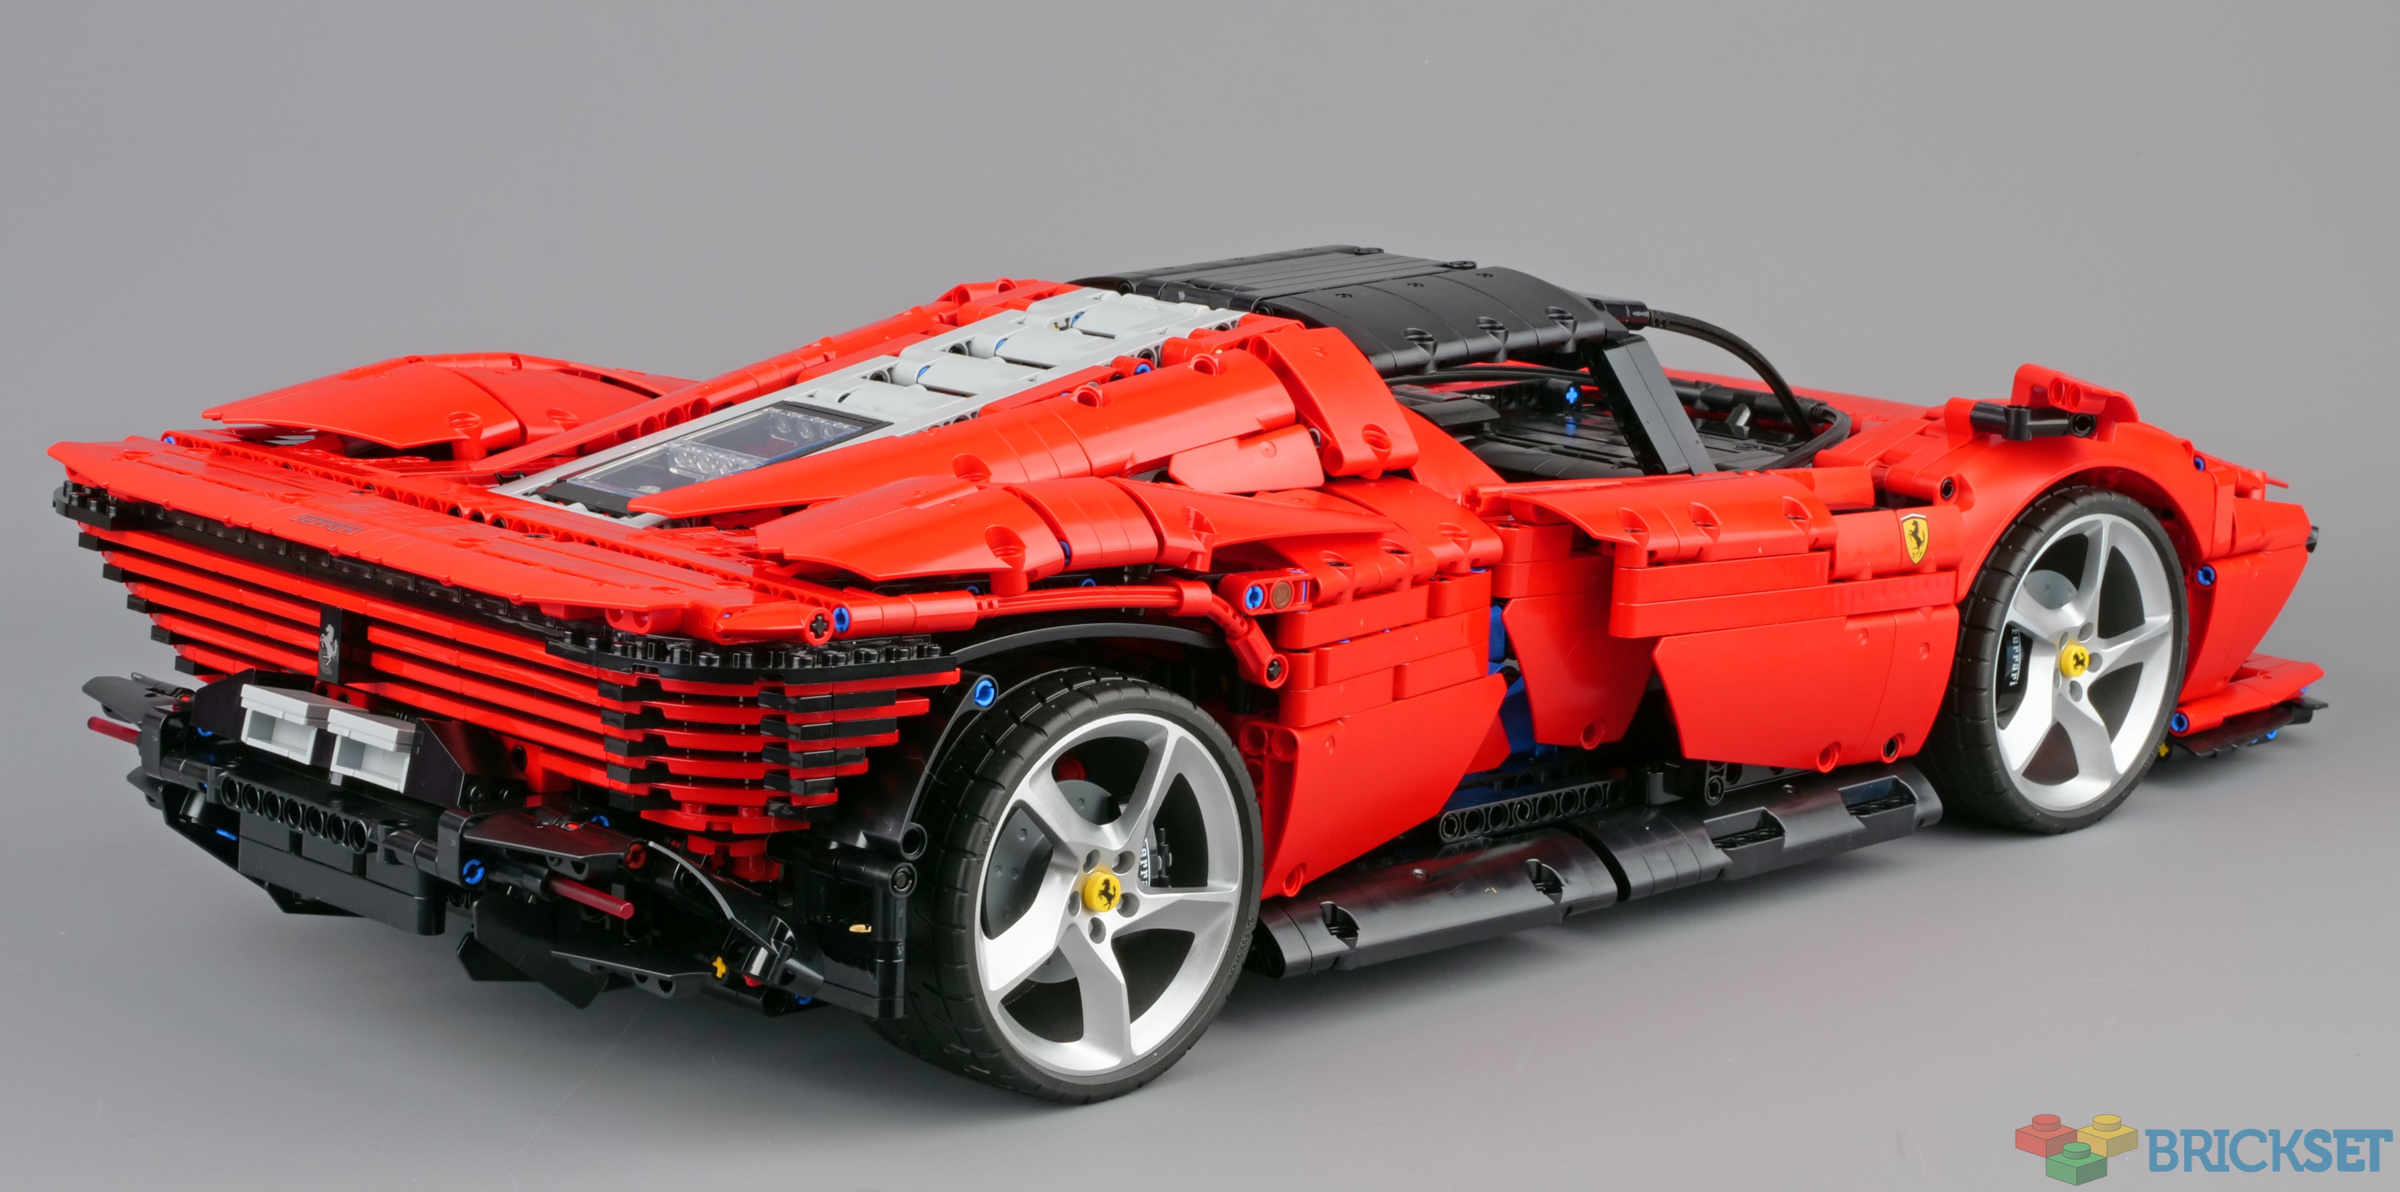 Lego's Ferrari Daytona SP3 Set Is as Insane as the Real Car